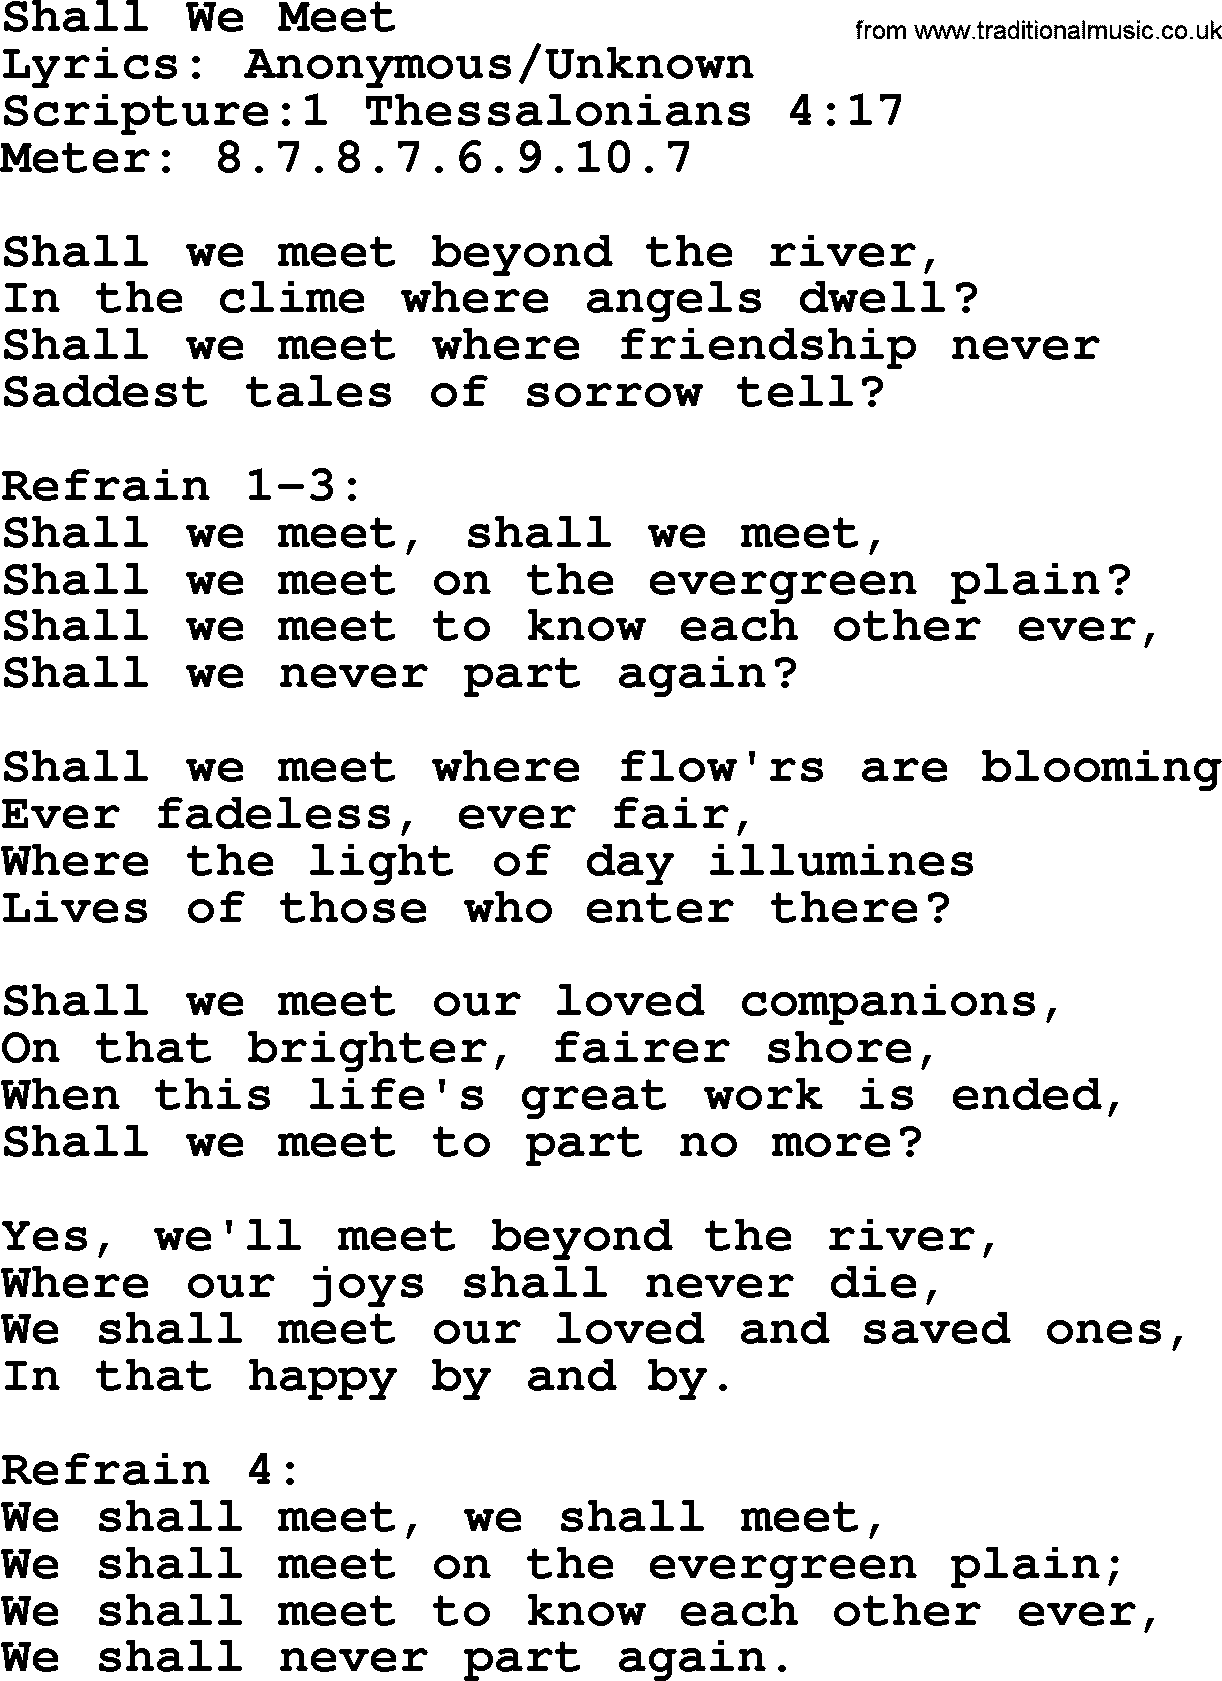 Hymns about  Angels, Hymn: Shall We Meet, lyrics, sheet music, midi & Mp3 music with PDF